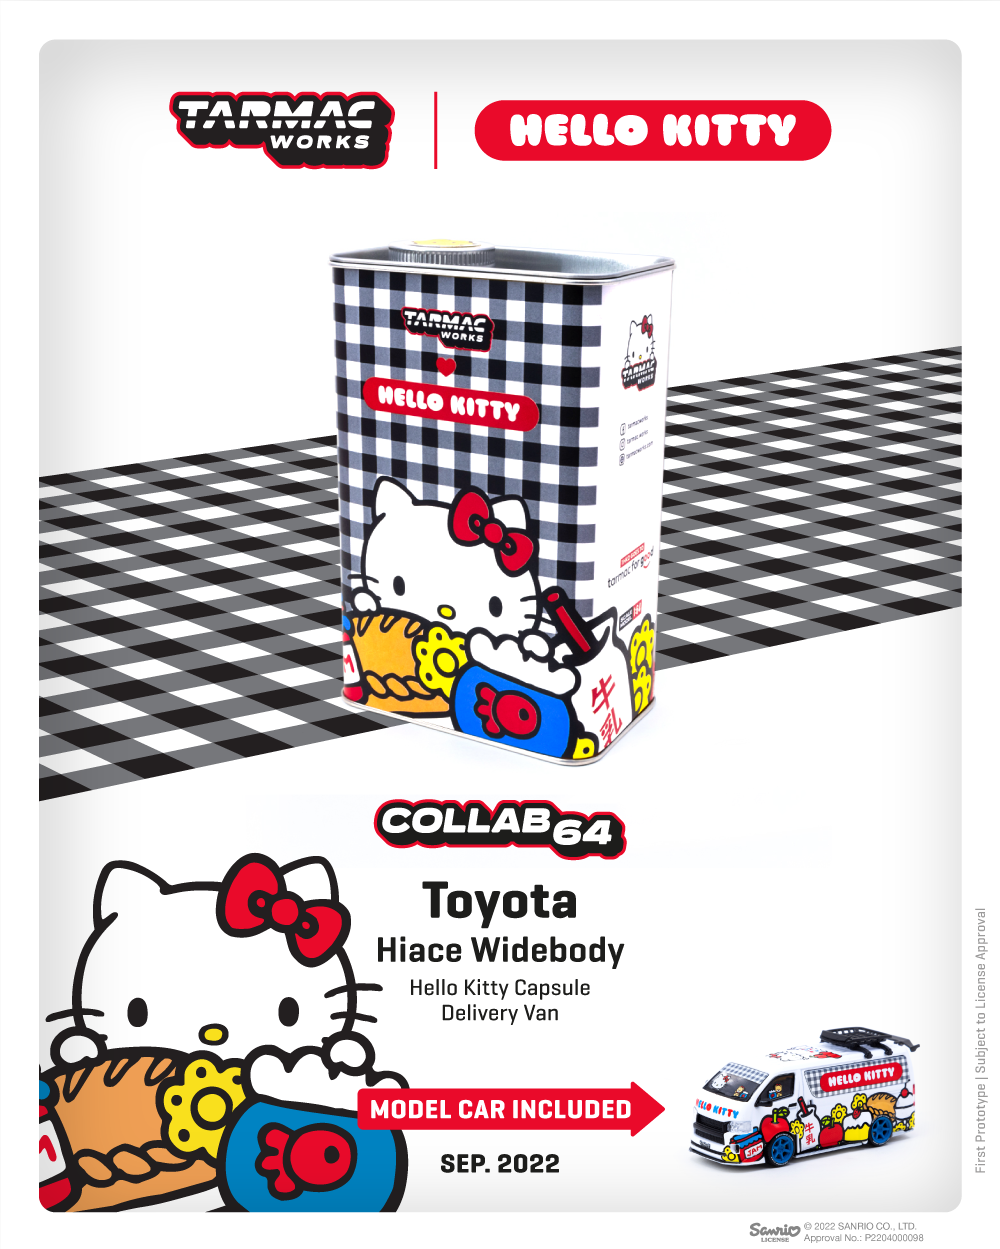 Tarmacworks 1:64 Toyota Hiace Widebody
Hello Kitty Capsule
Delivery Van Tarmacworks